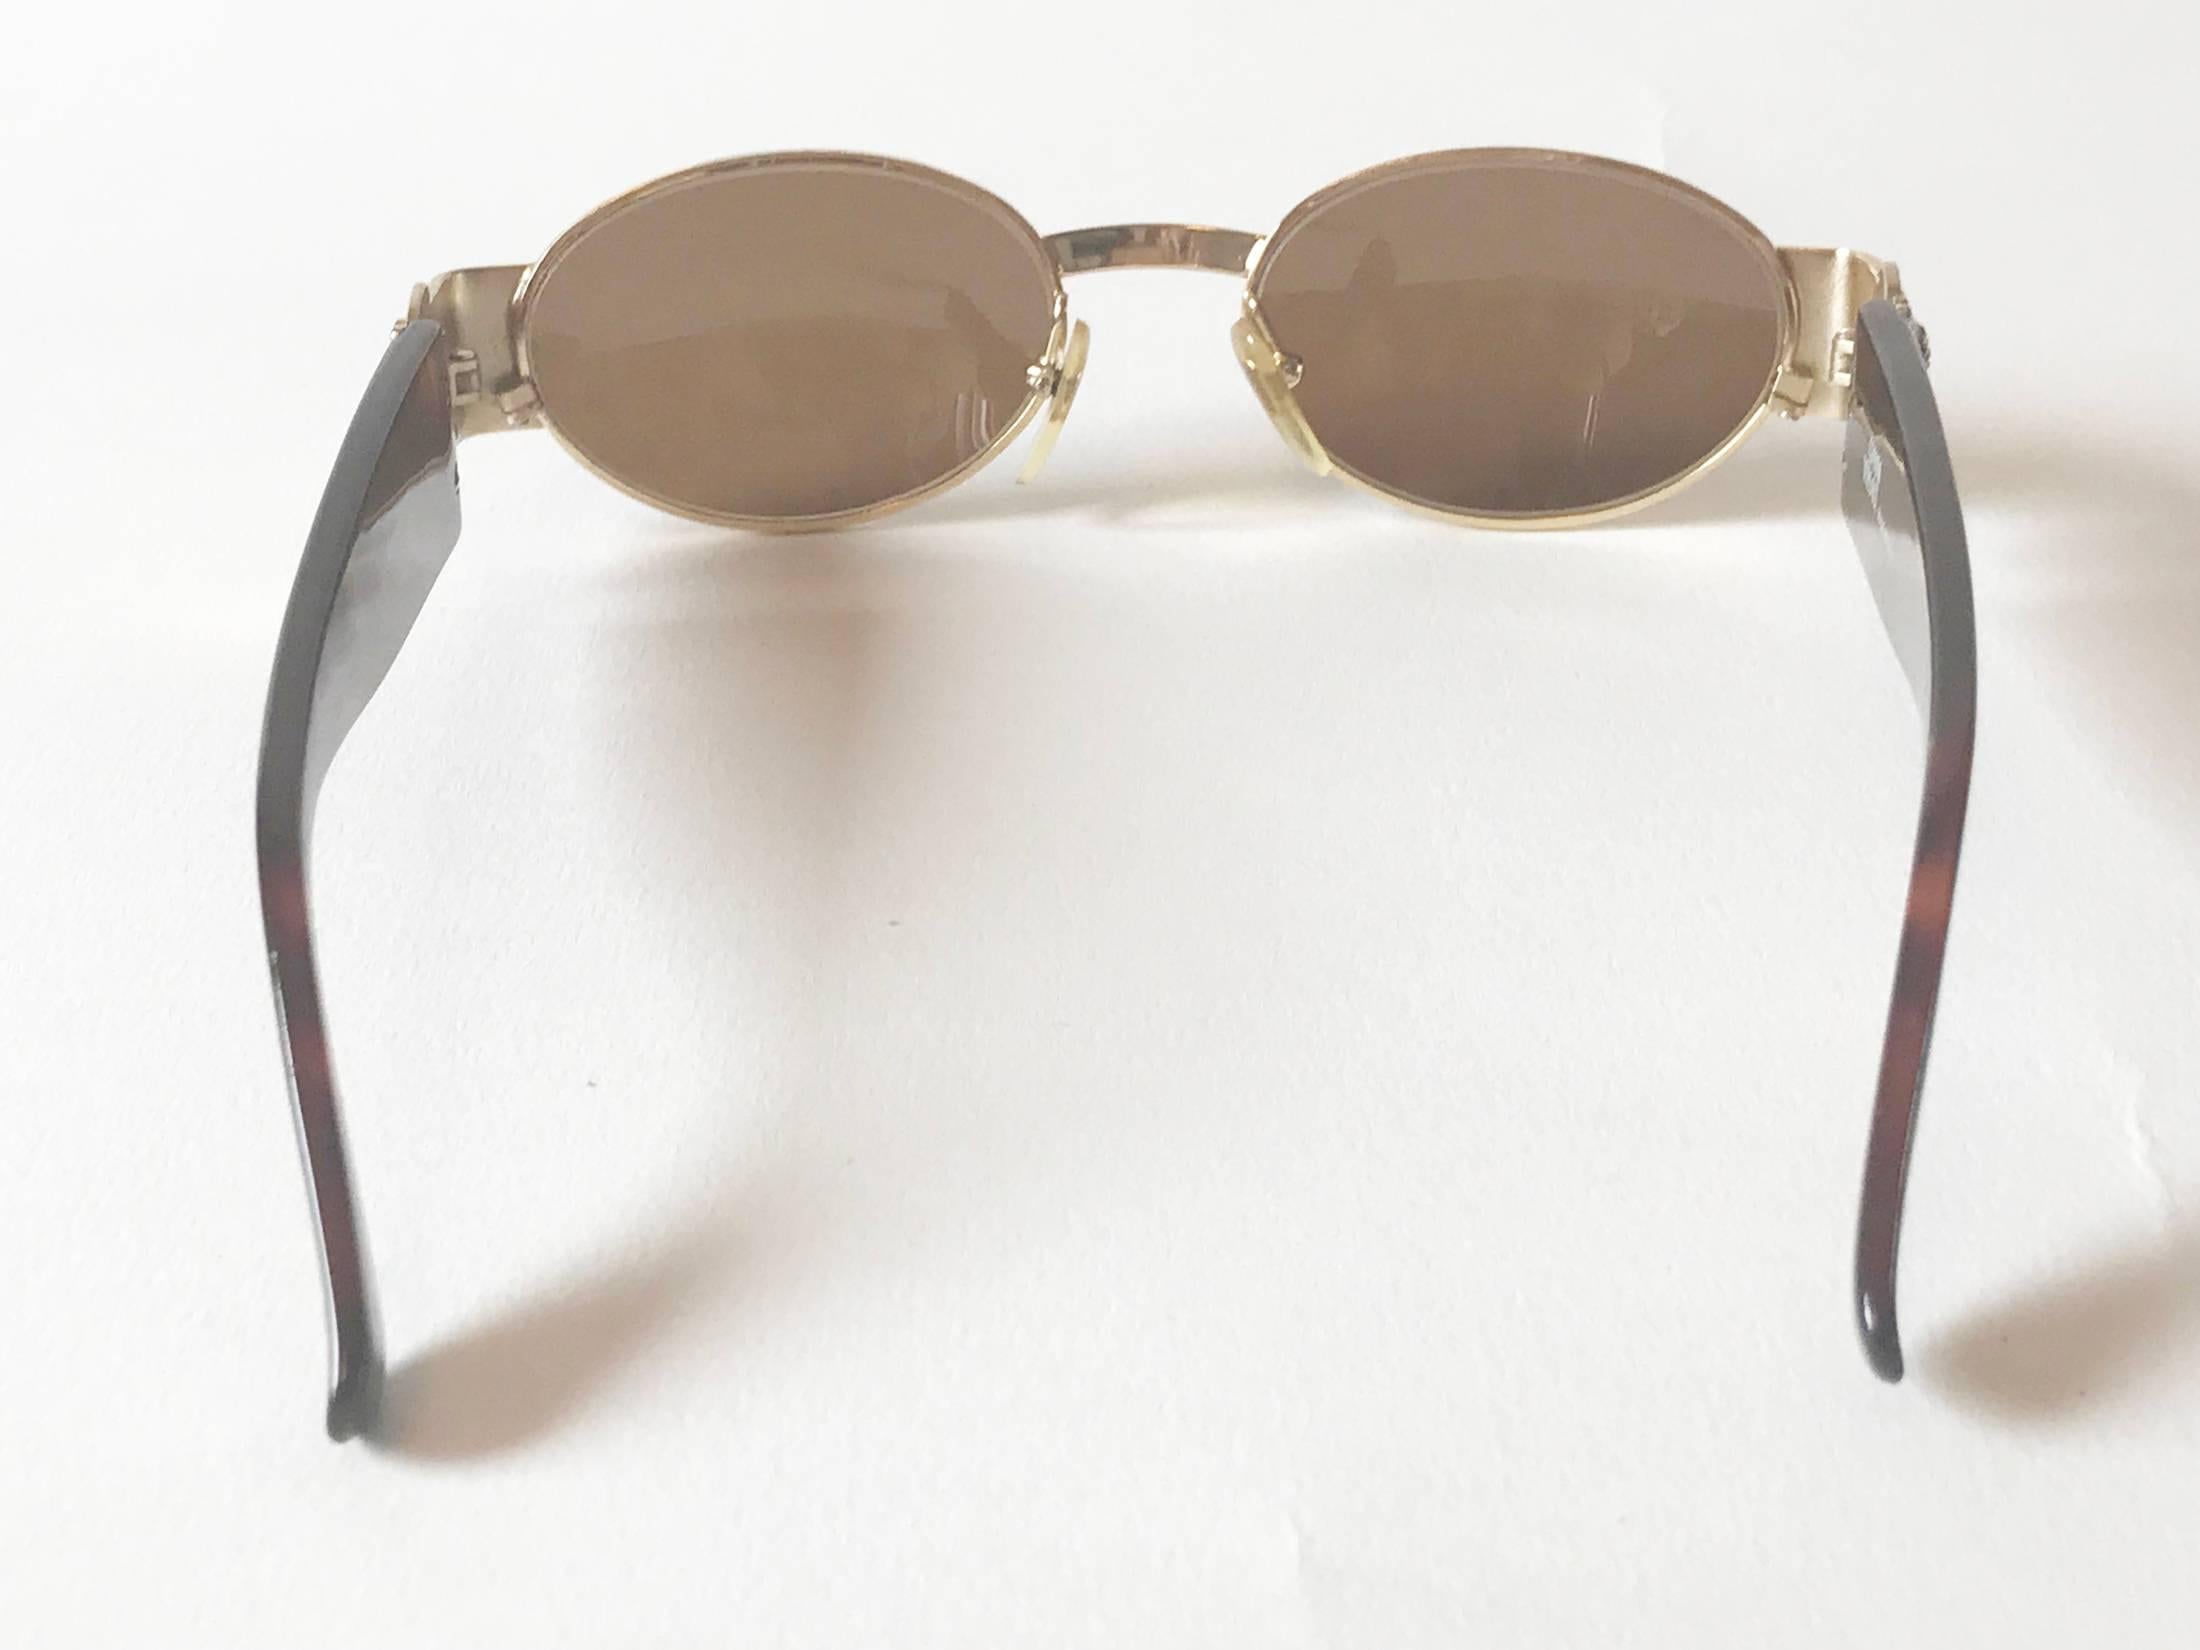 Gray Gianni Versace Sunglasses. Mod. S72 Col. 31L.